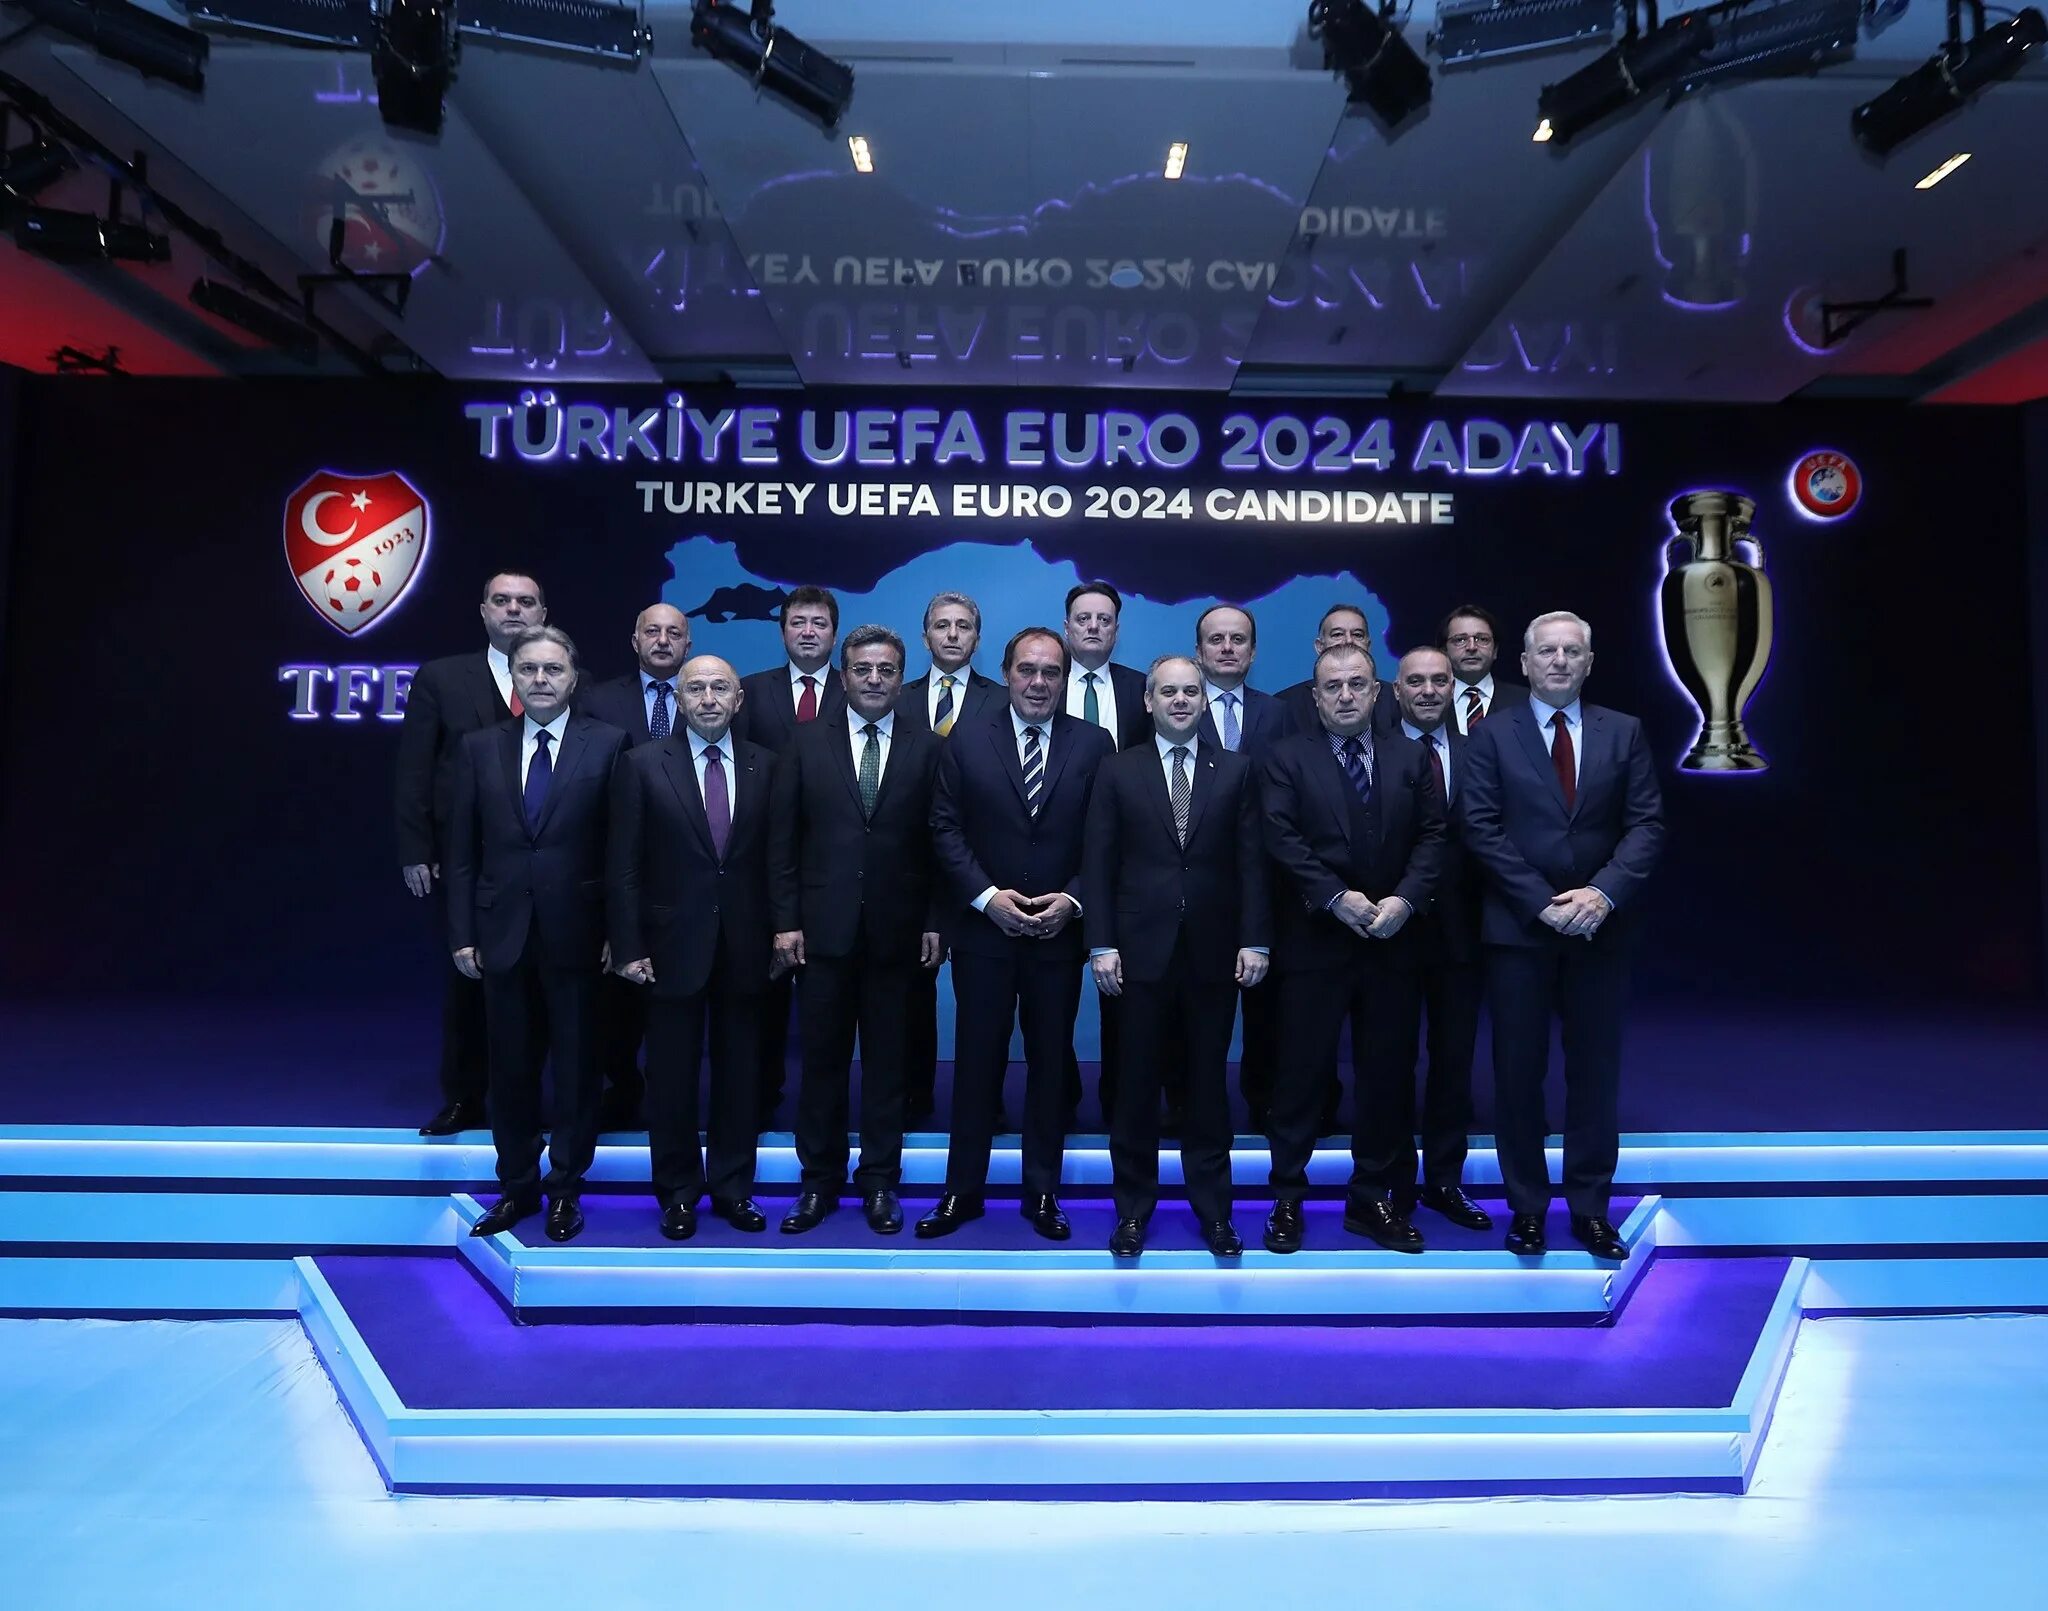 Pörno türkiye 2024. Euro 2024. UEFA Euro 2024. Евро 2024 фото. UEFA Euro 2024 лого.